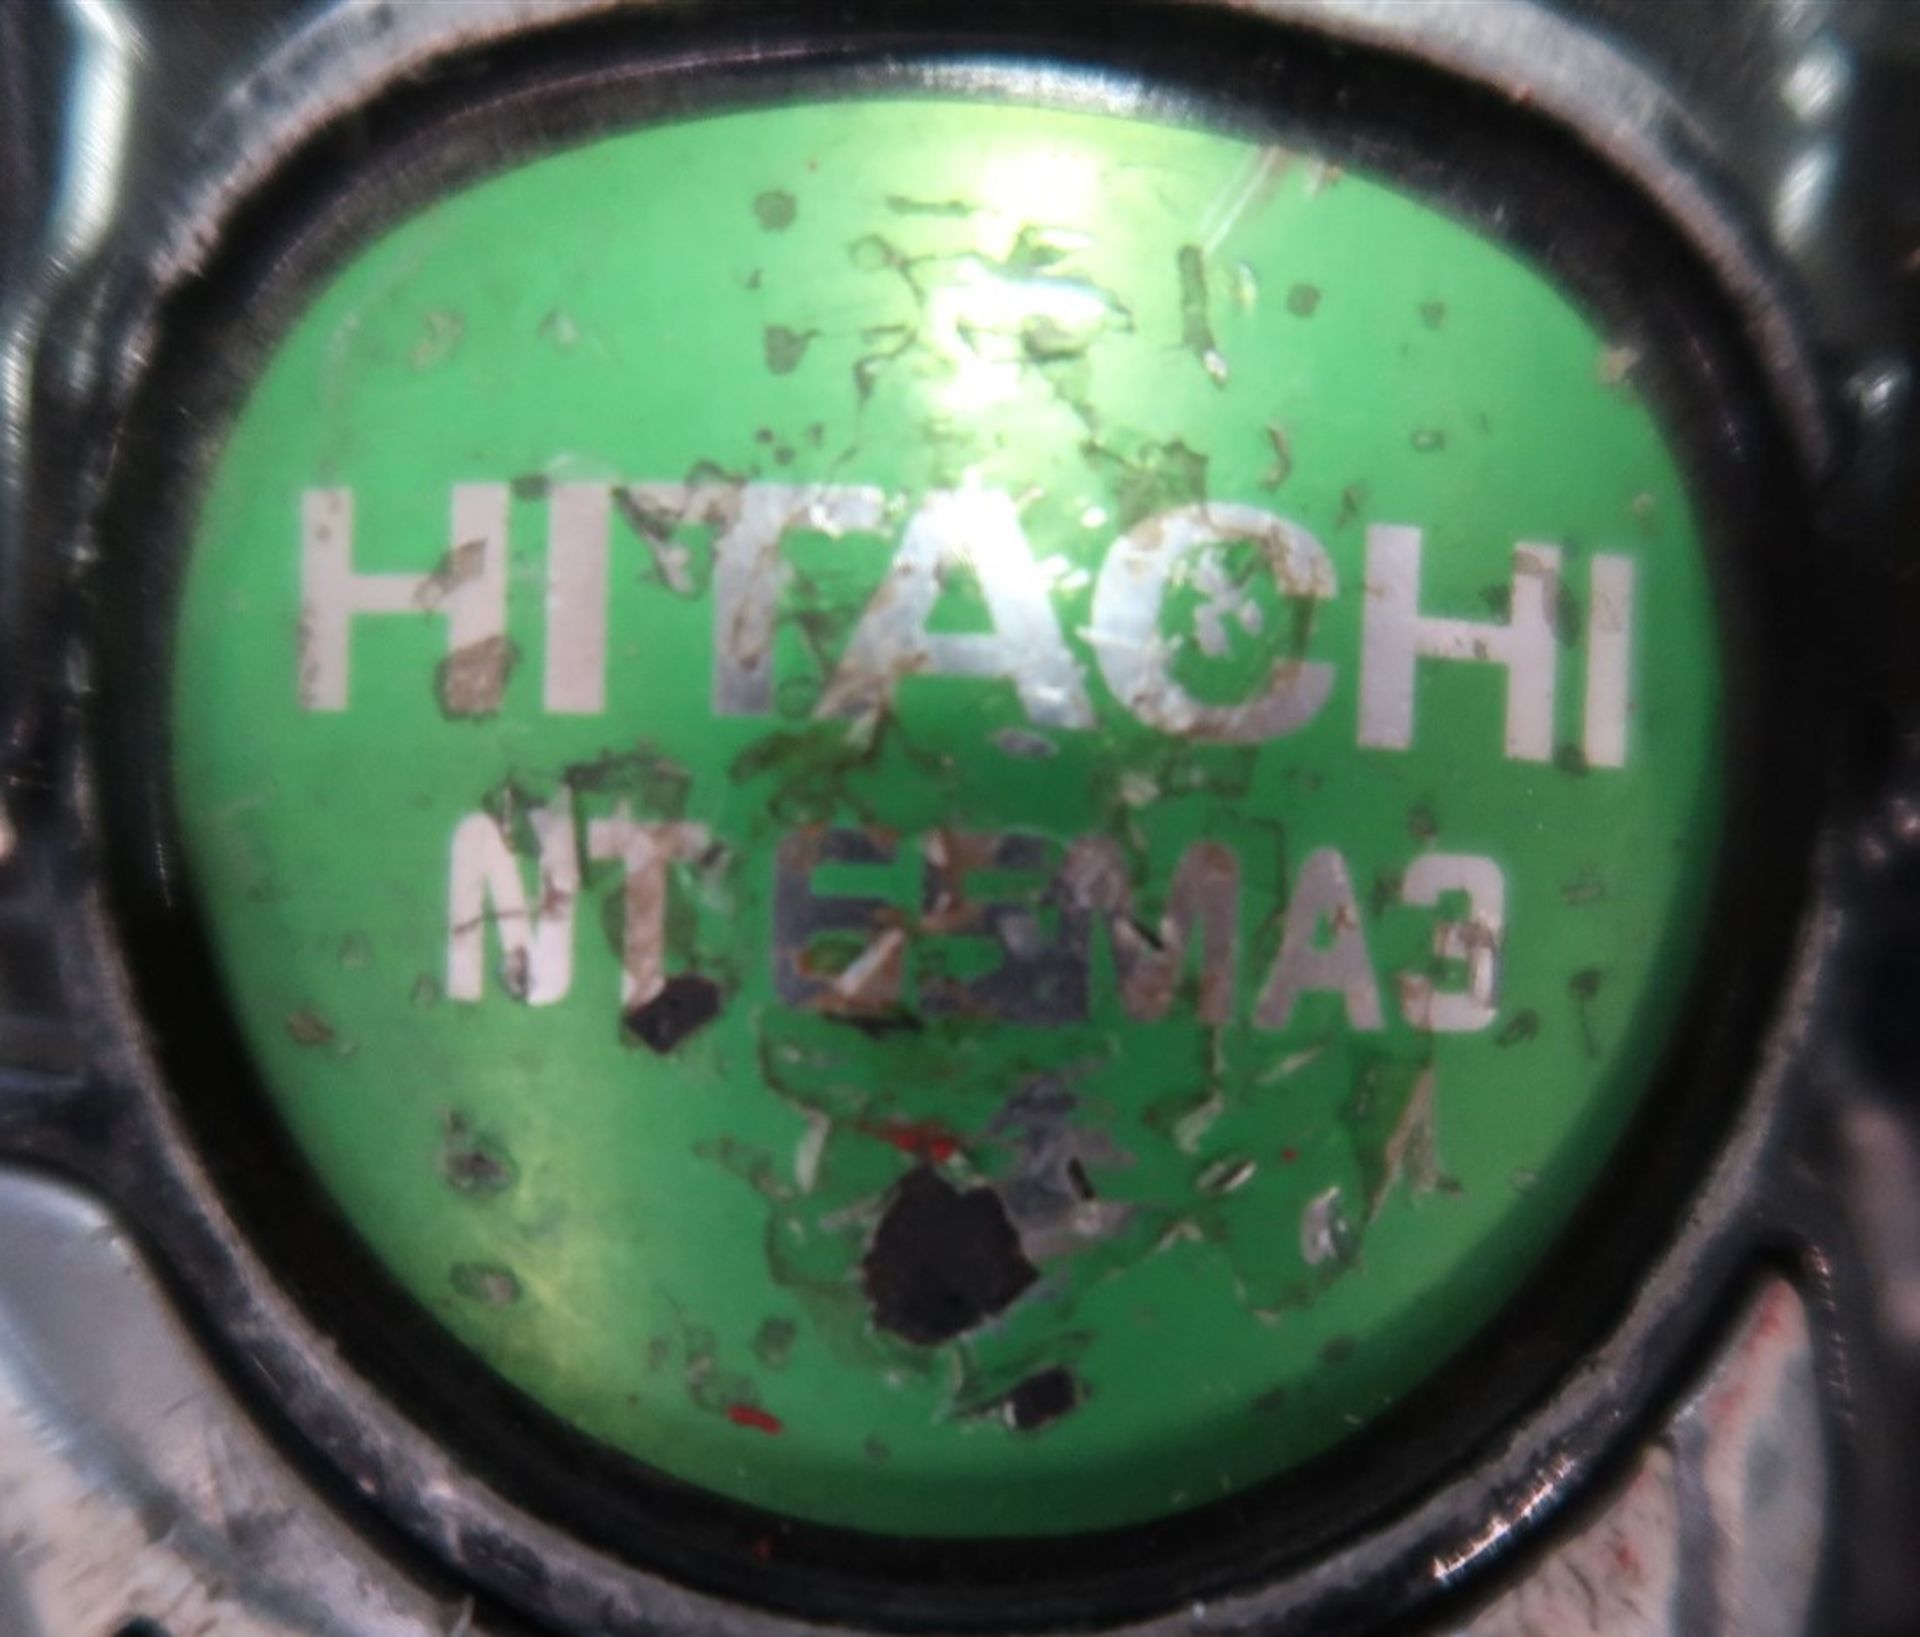 HITACHI 2 1/2 IN. FINISH NAILER - Image 2 of 2